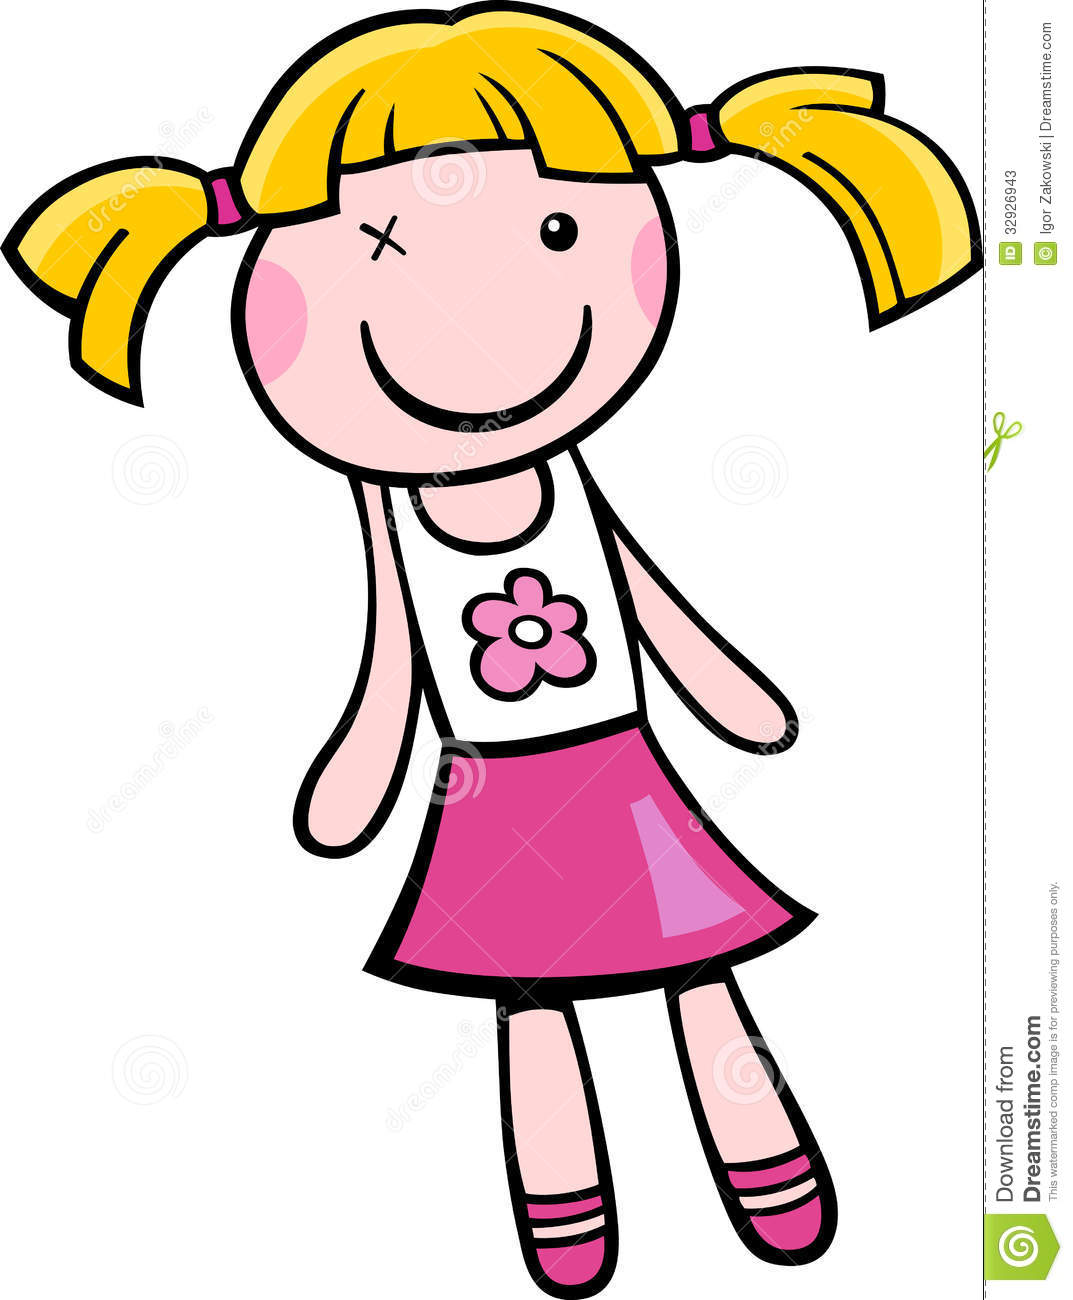 Doll Clip Art Cartoon Illustration Stock Photos   Image  32926943